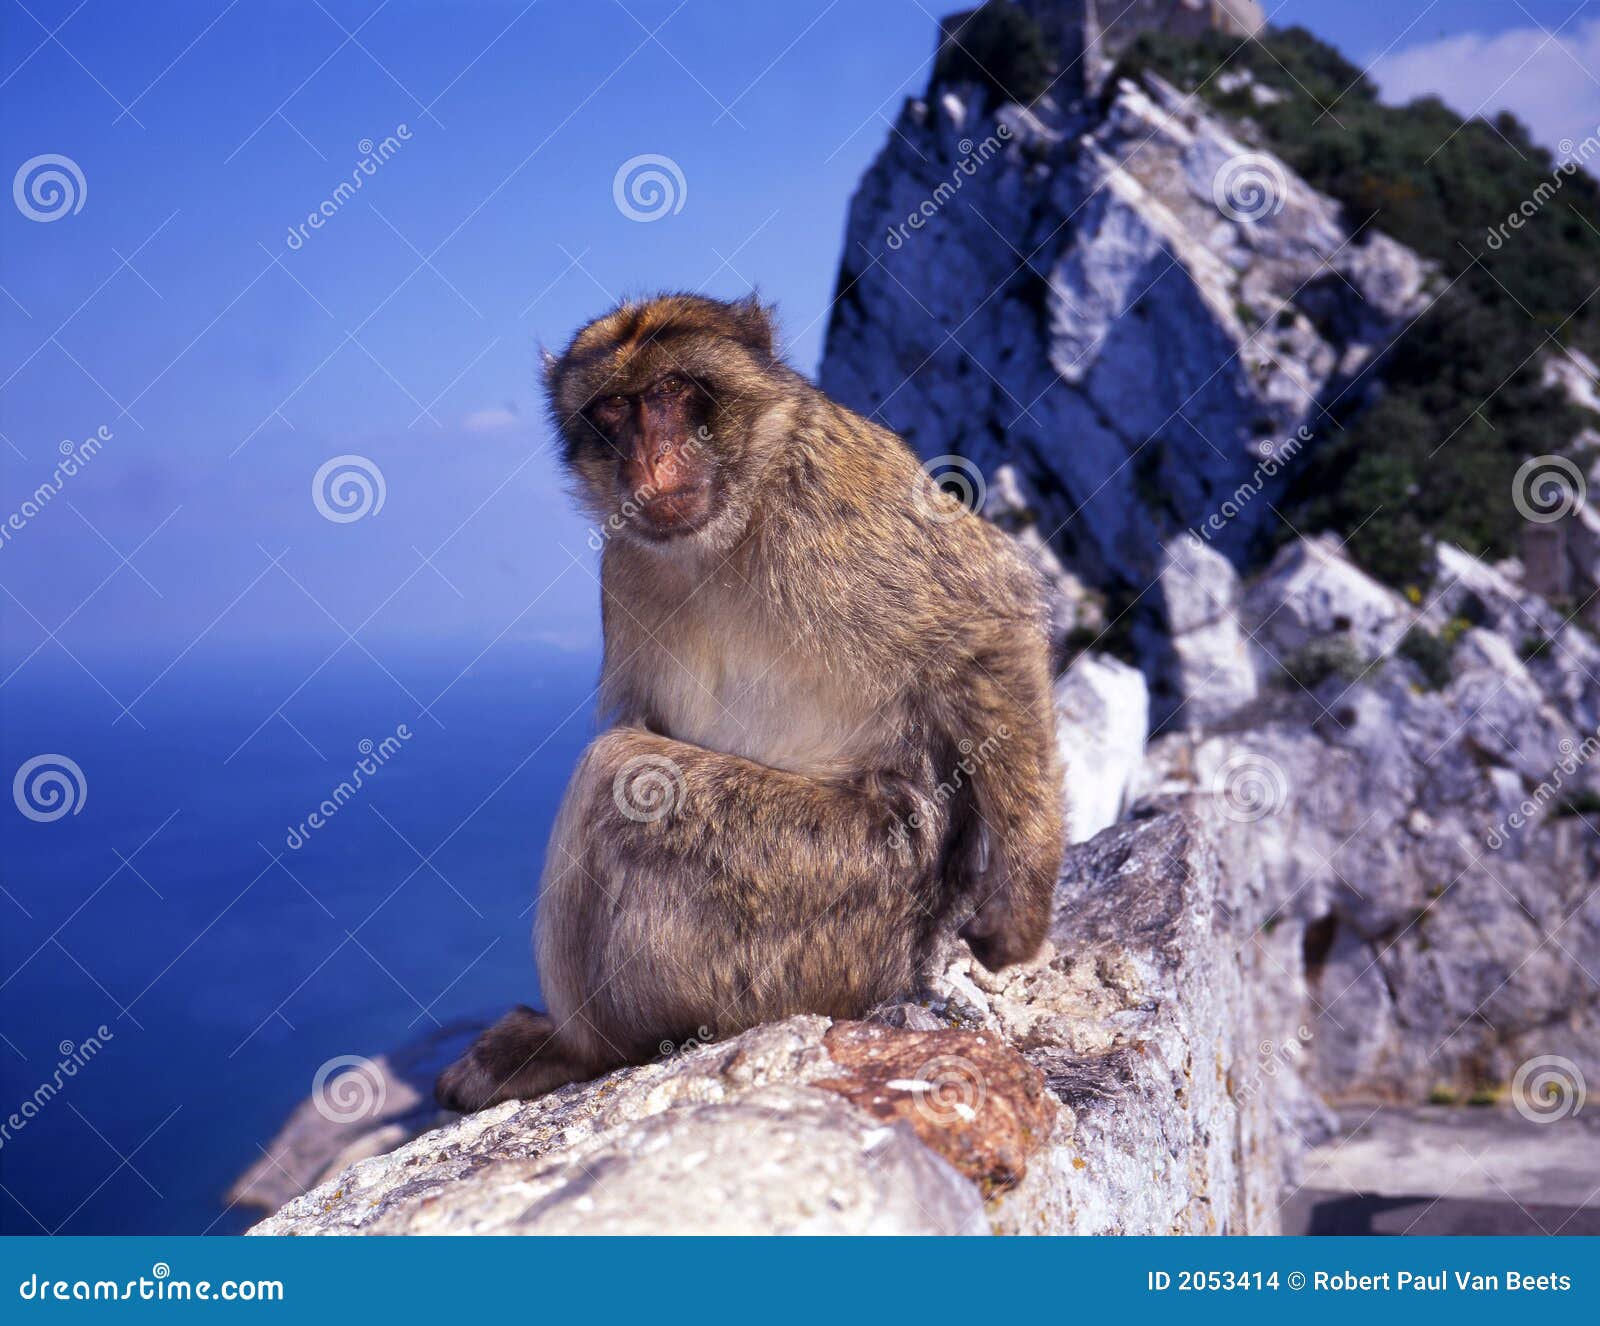 Скала обезьяна. Гибралтарская Скальная обезьяна. Обезьяна на скале. Обезьяны в скалах. Обезьяна на скале Гибралтар.